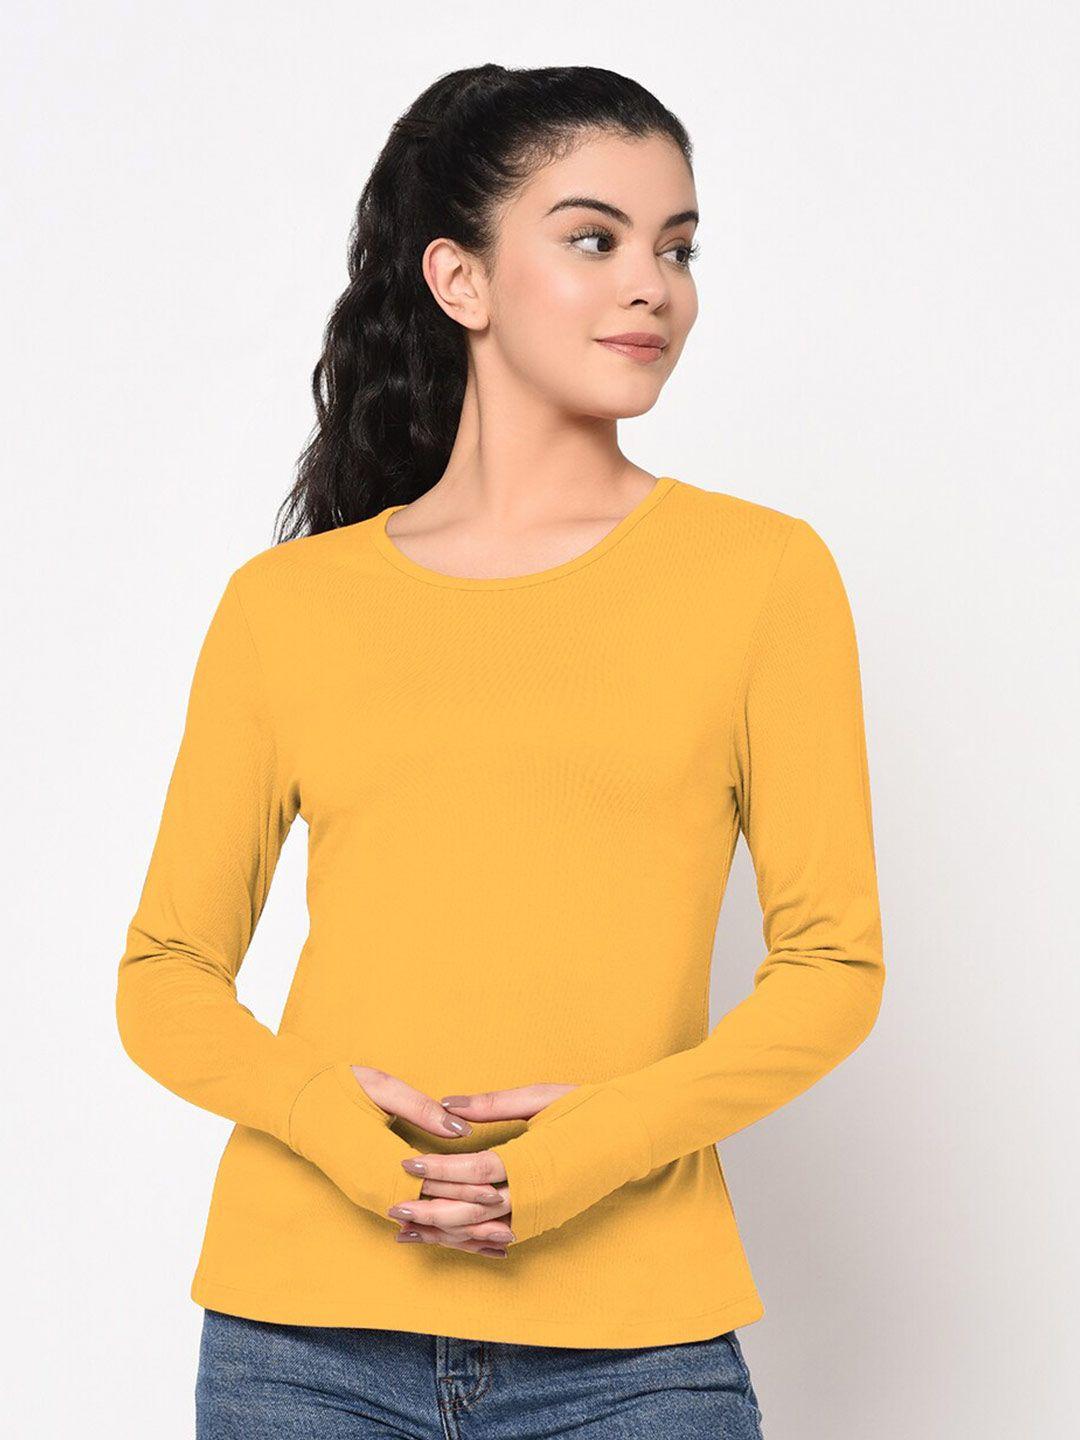 sharktribe women mustard yellow applique slim fit t-shirt